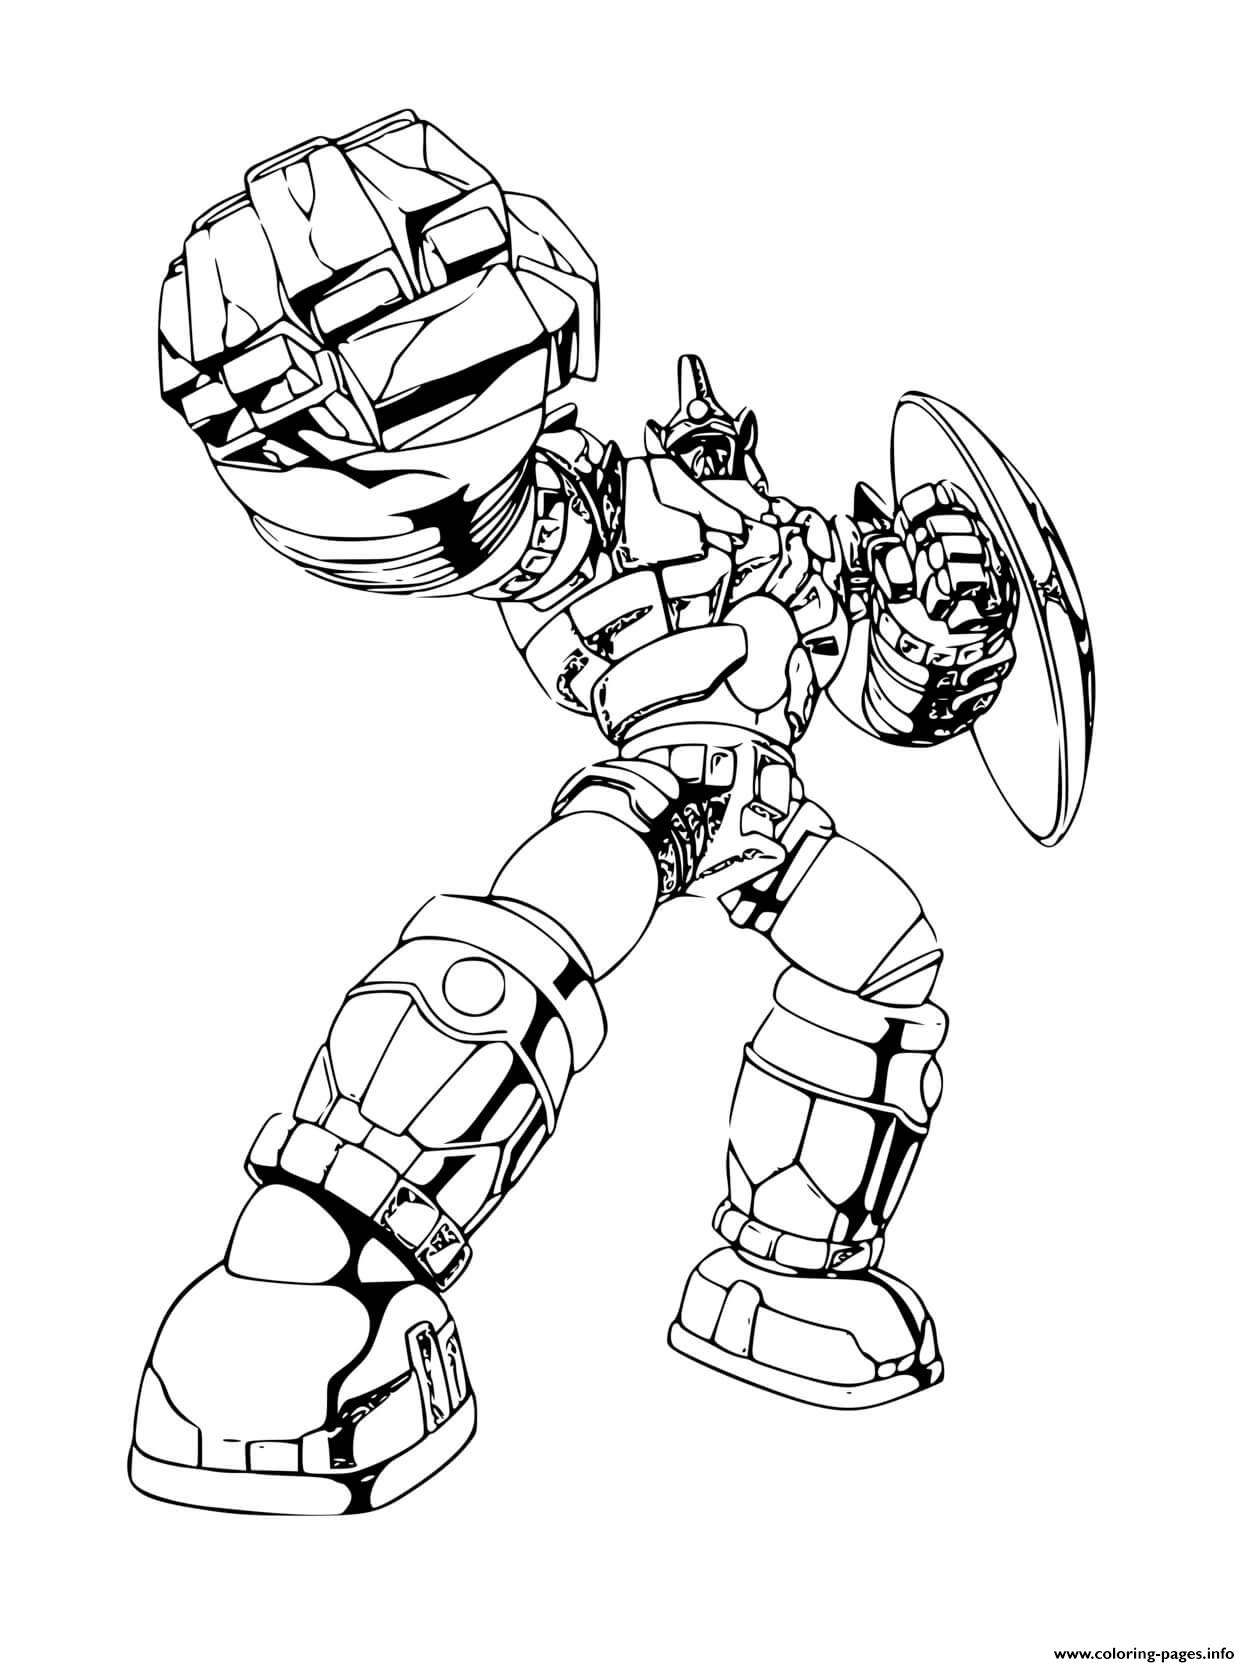 Bakugan Robot coloring